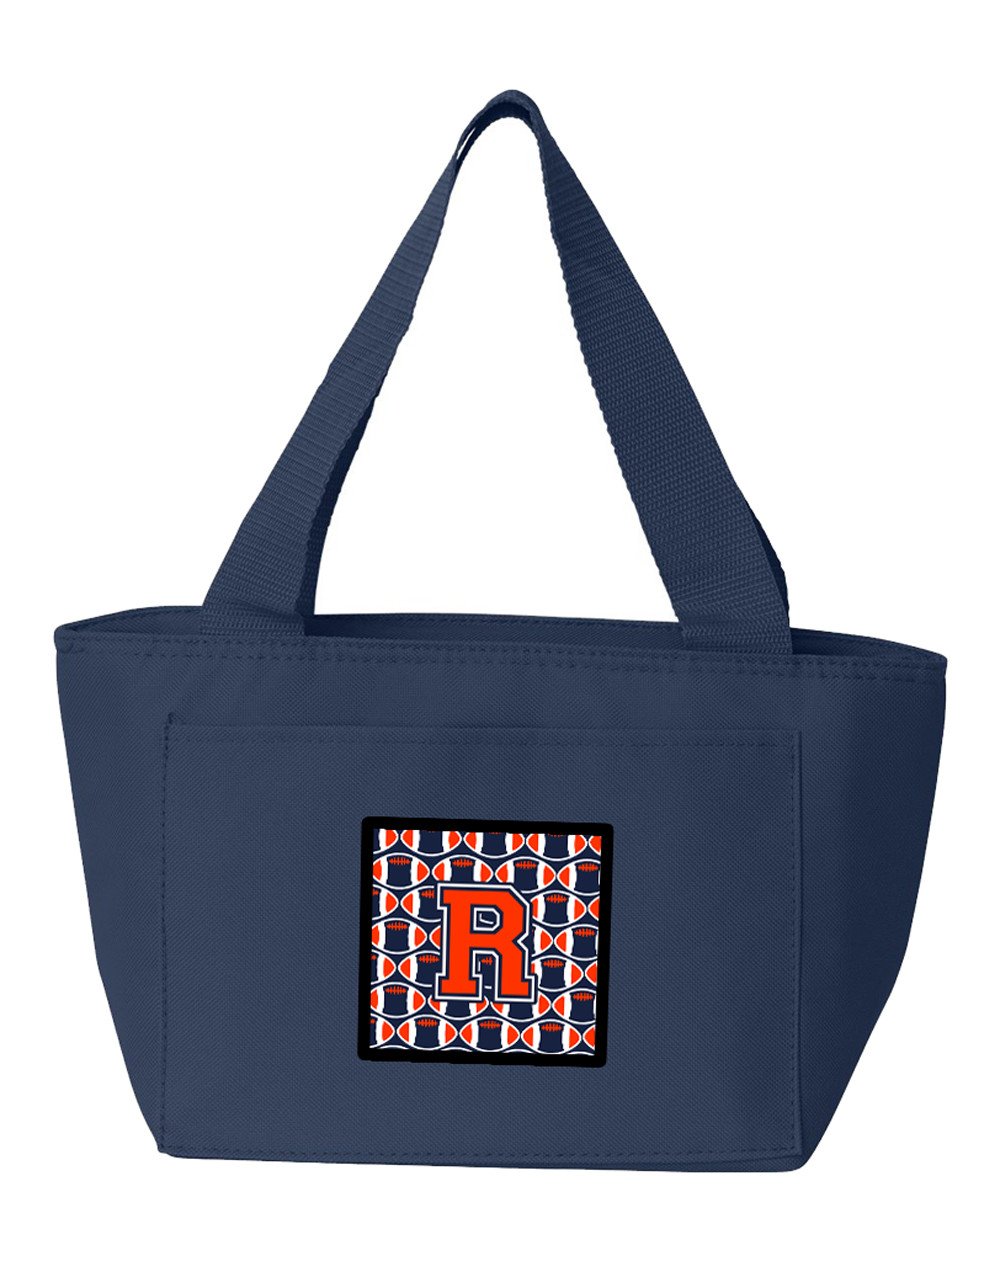 Letter R Football Orange, Blue and white Lunch Bag CJ1066-RNA-8808 by Caroline's Treasures